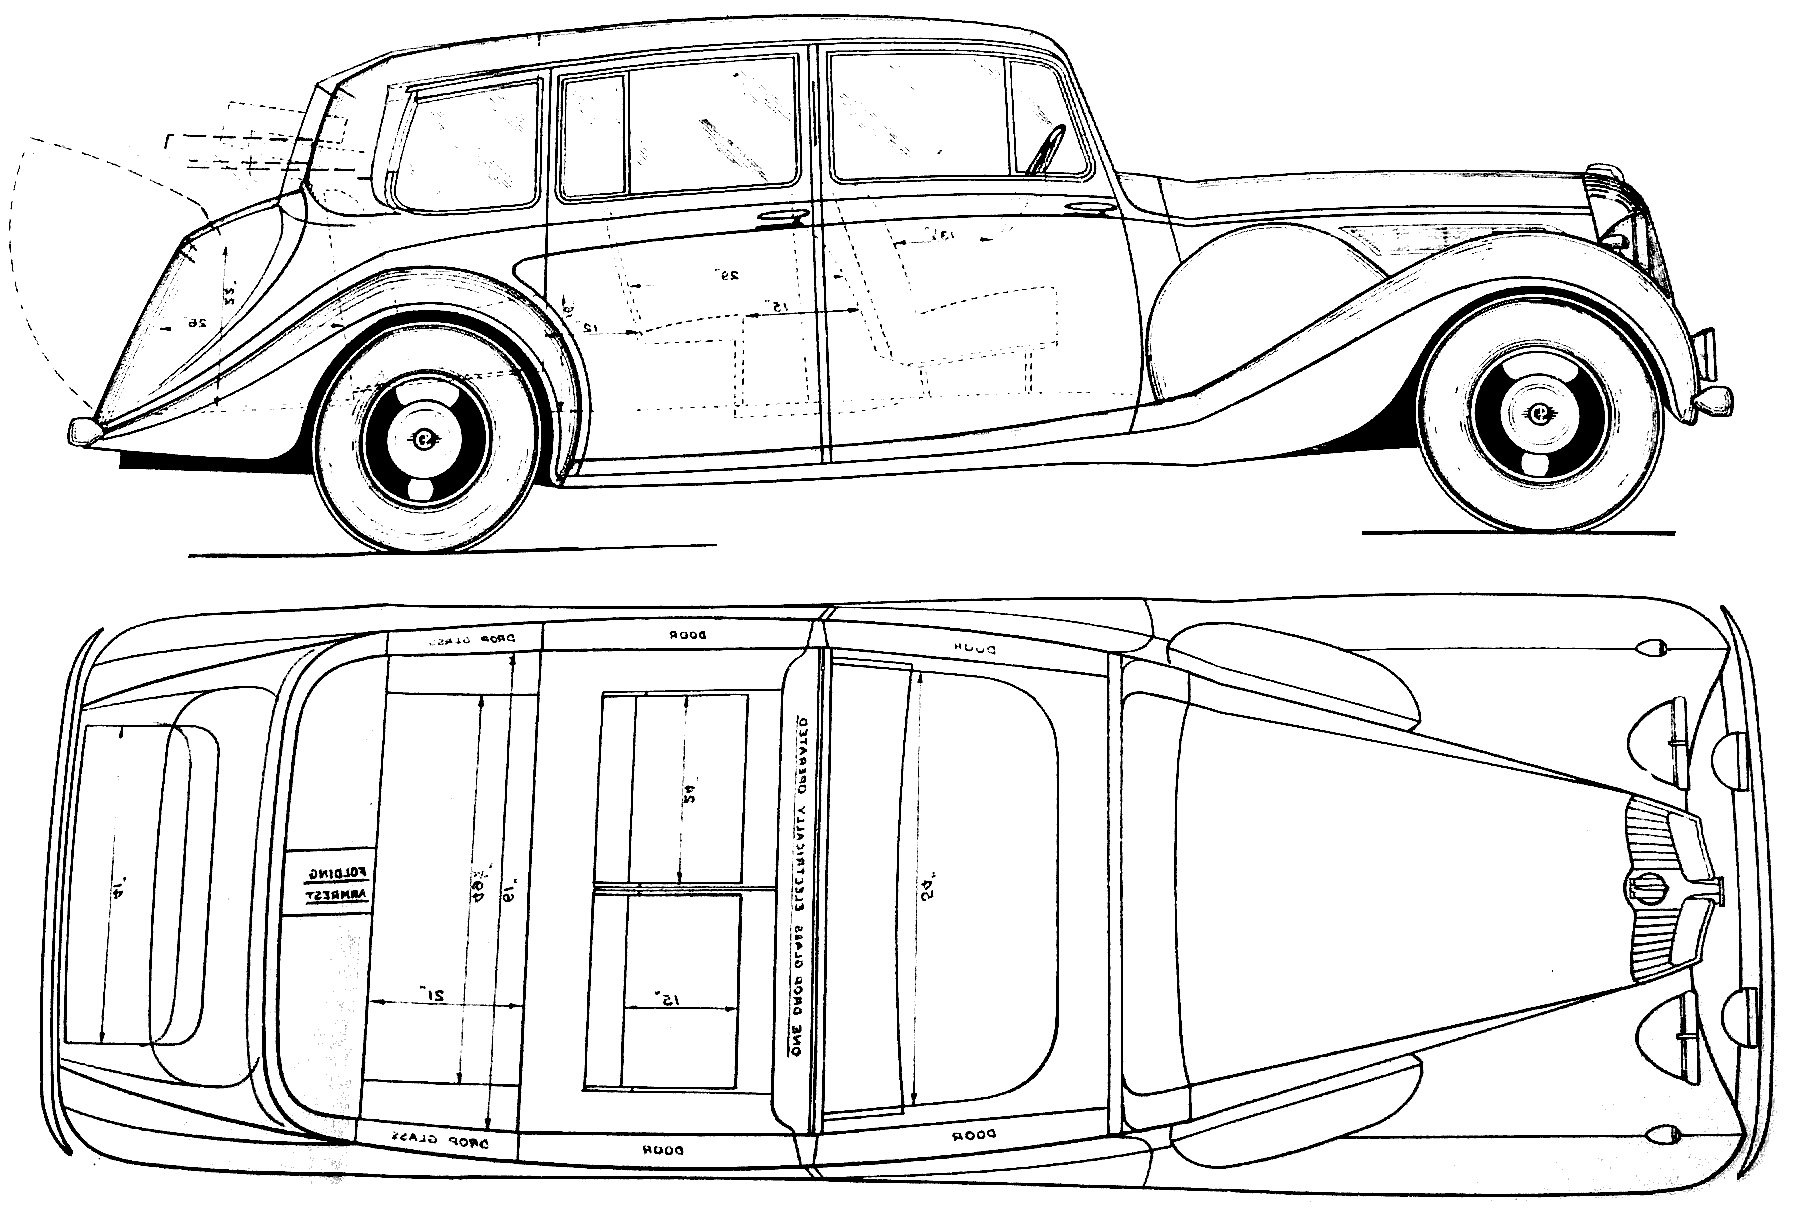 Daimler DE 36 blueprint